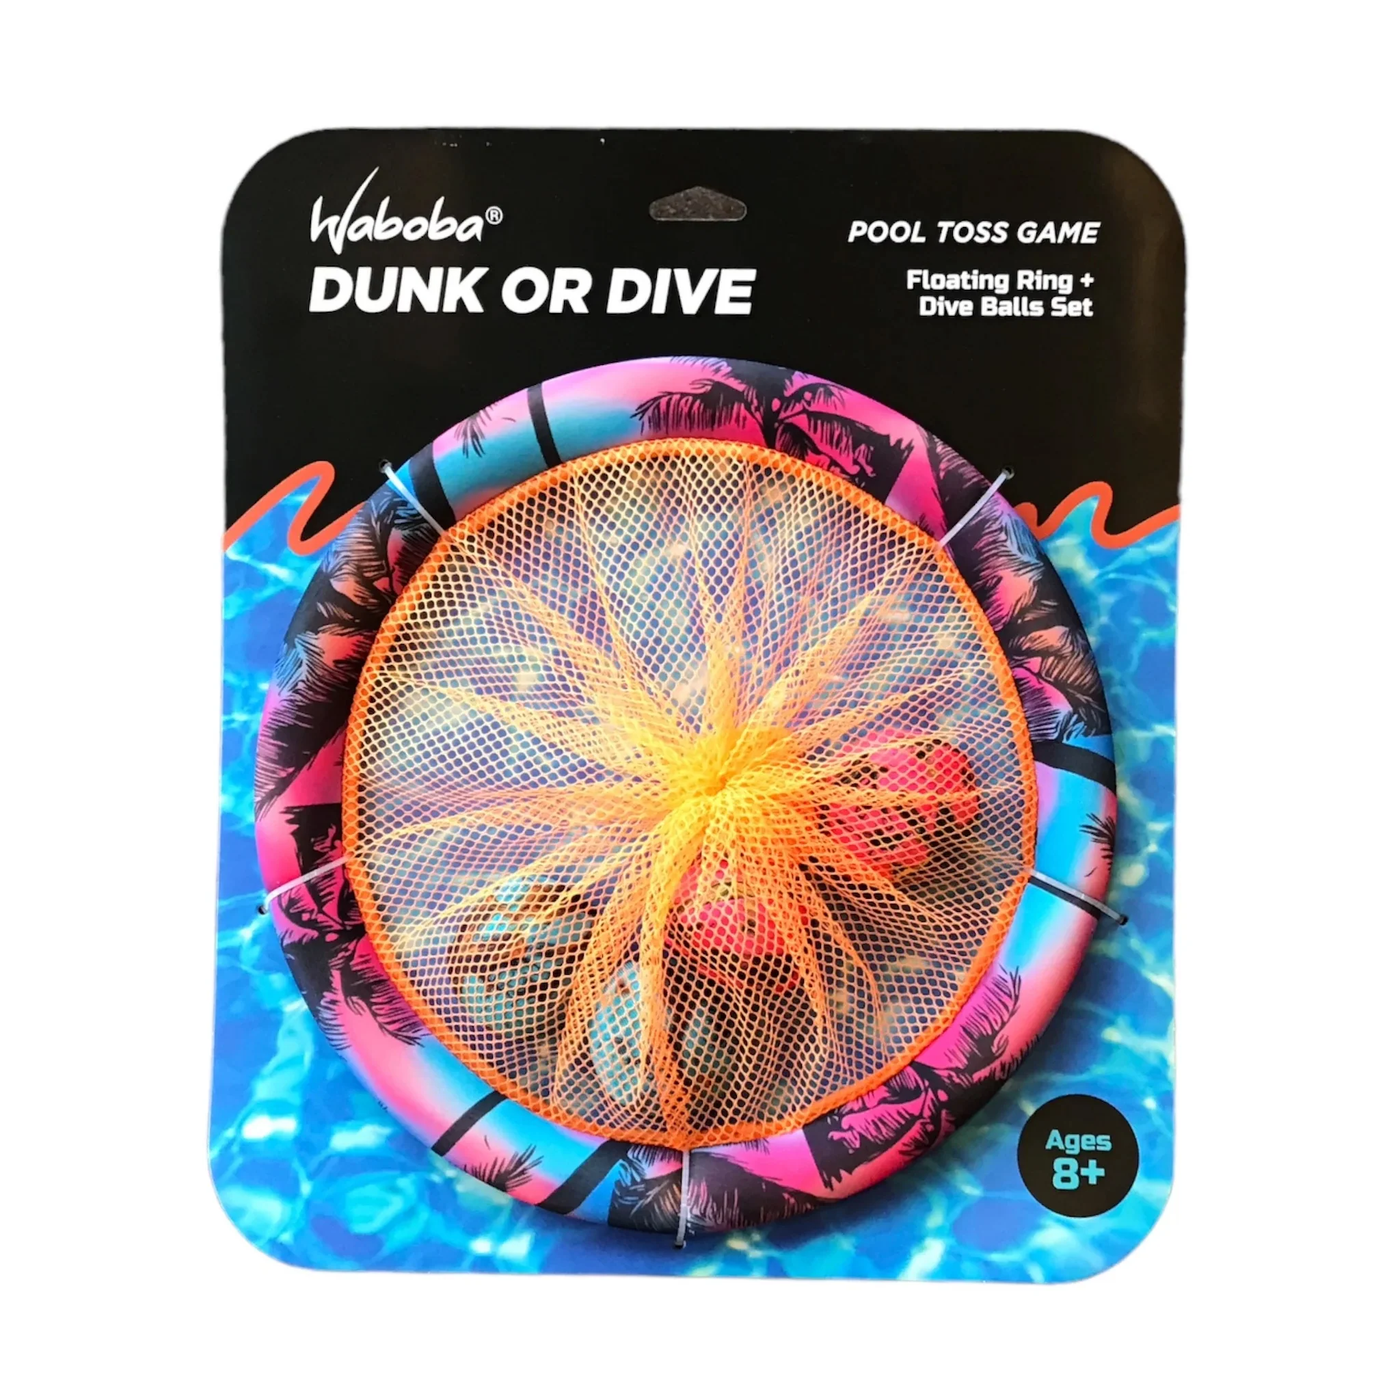 Waboba Dunk or Dive